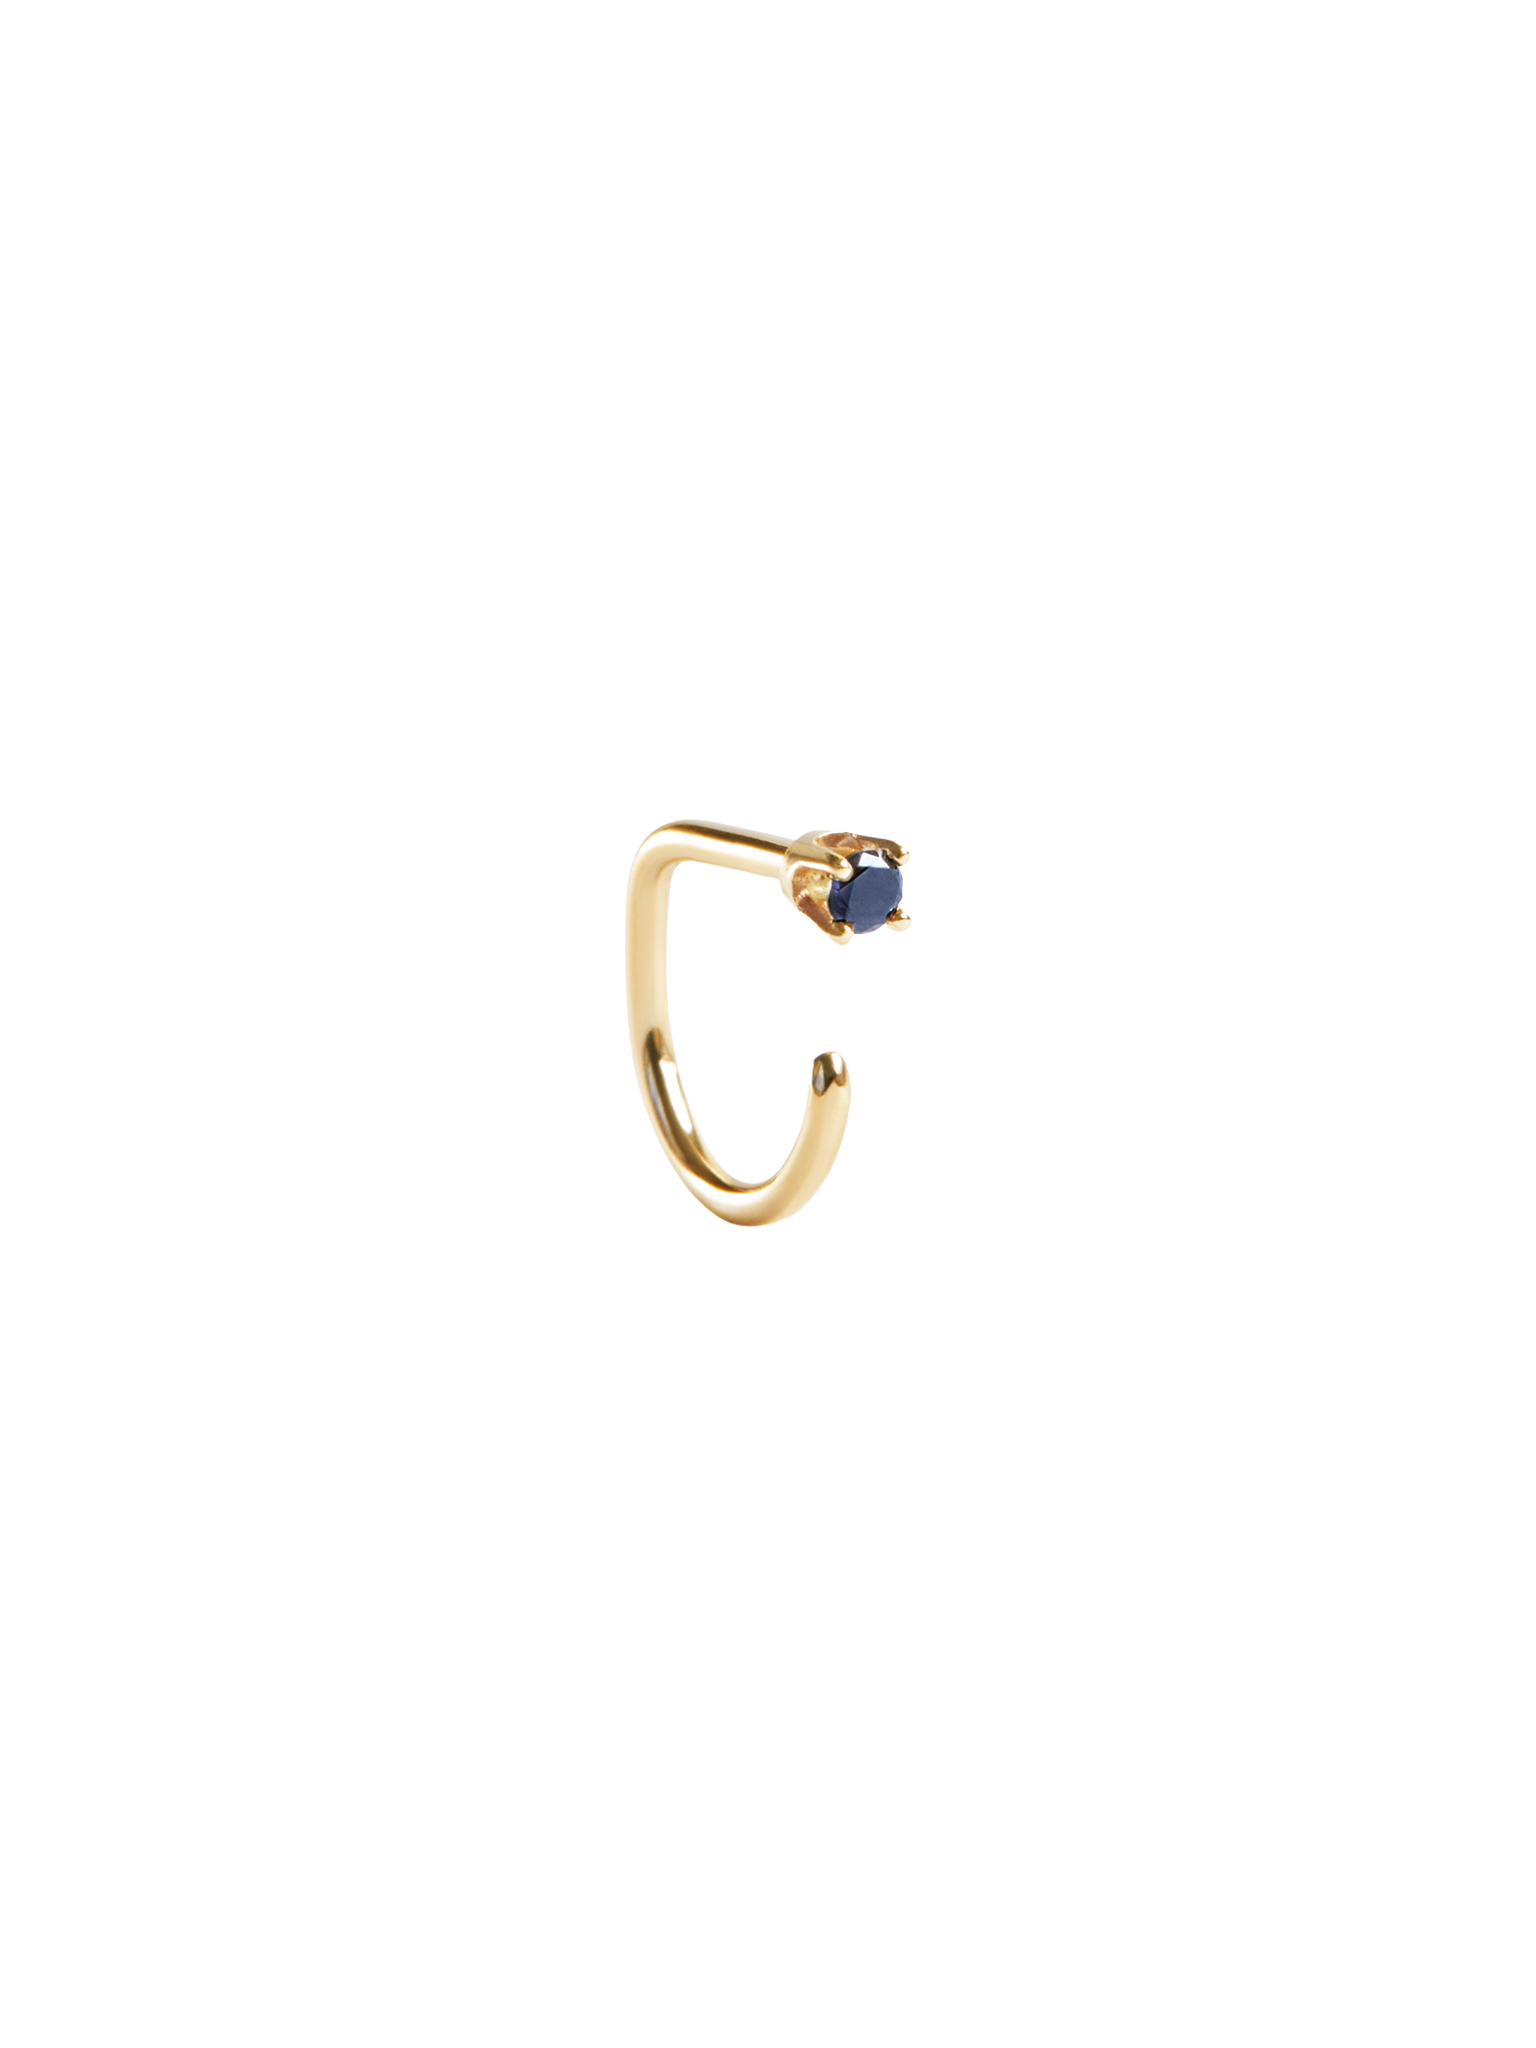 Small black diamond claw earring